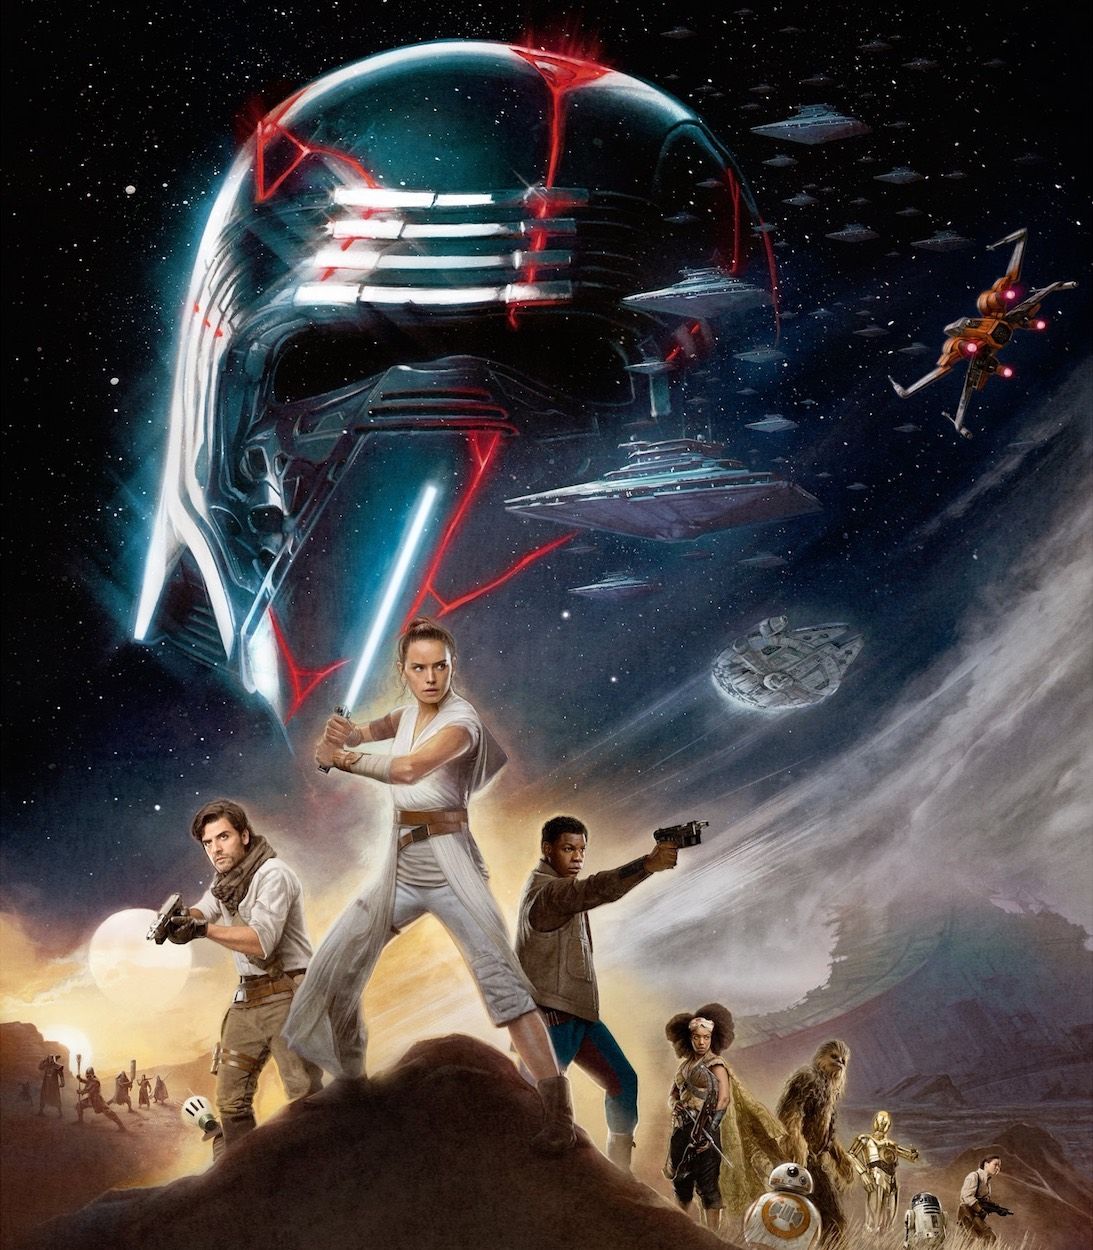 Star Wars The Rise of Skywalker RealD 3D Poster